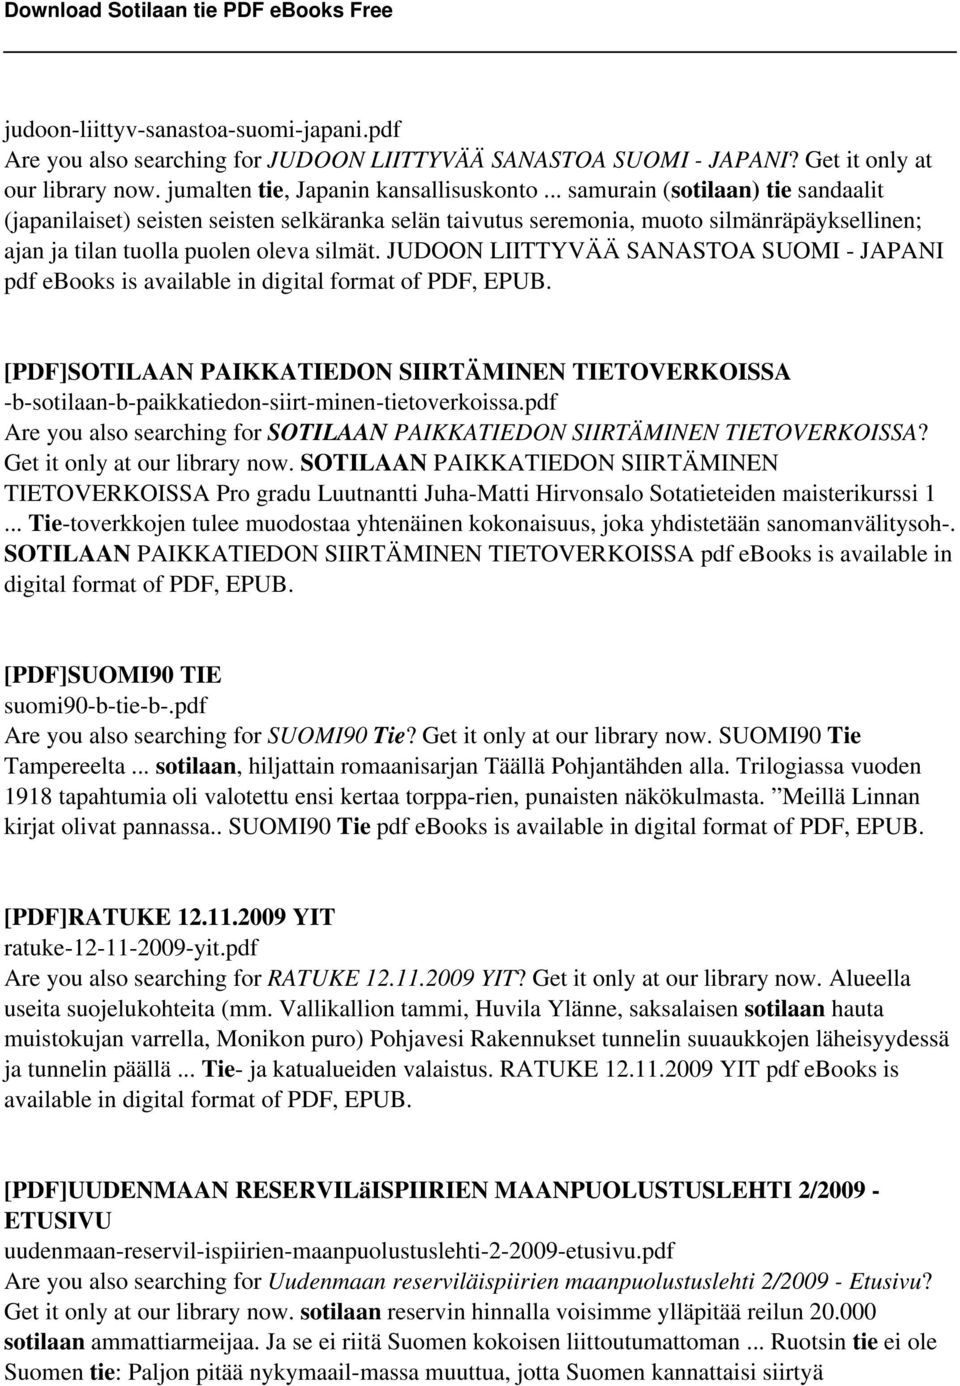 JUDOON LIITTYVÄÄ SANASTOA SUOMI - JAPANI pdf ebooks is available in digital format of PDF, EPUB.